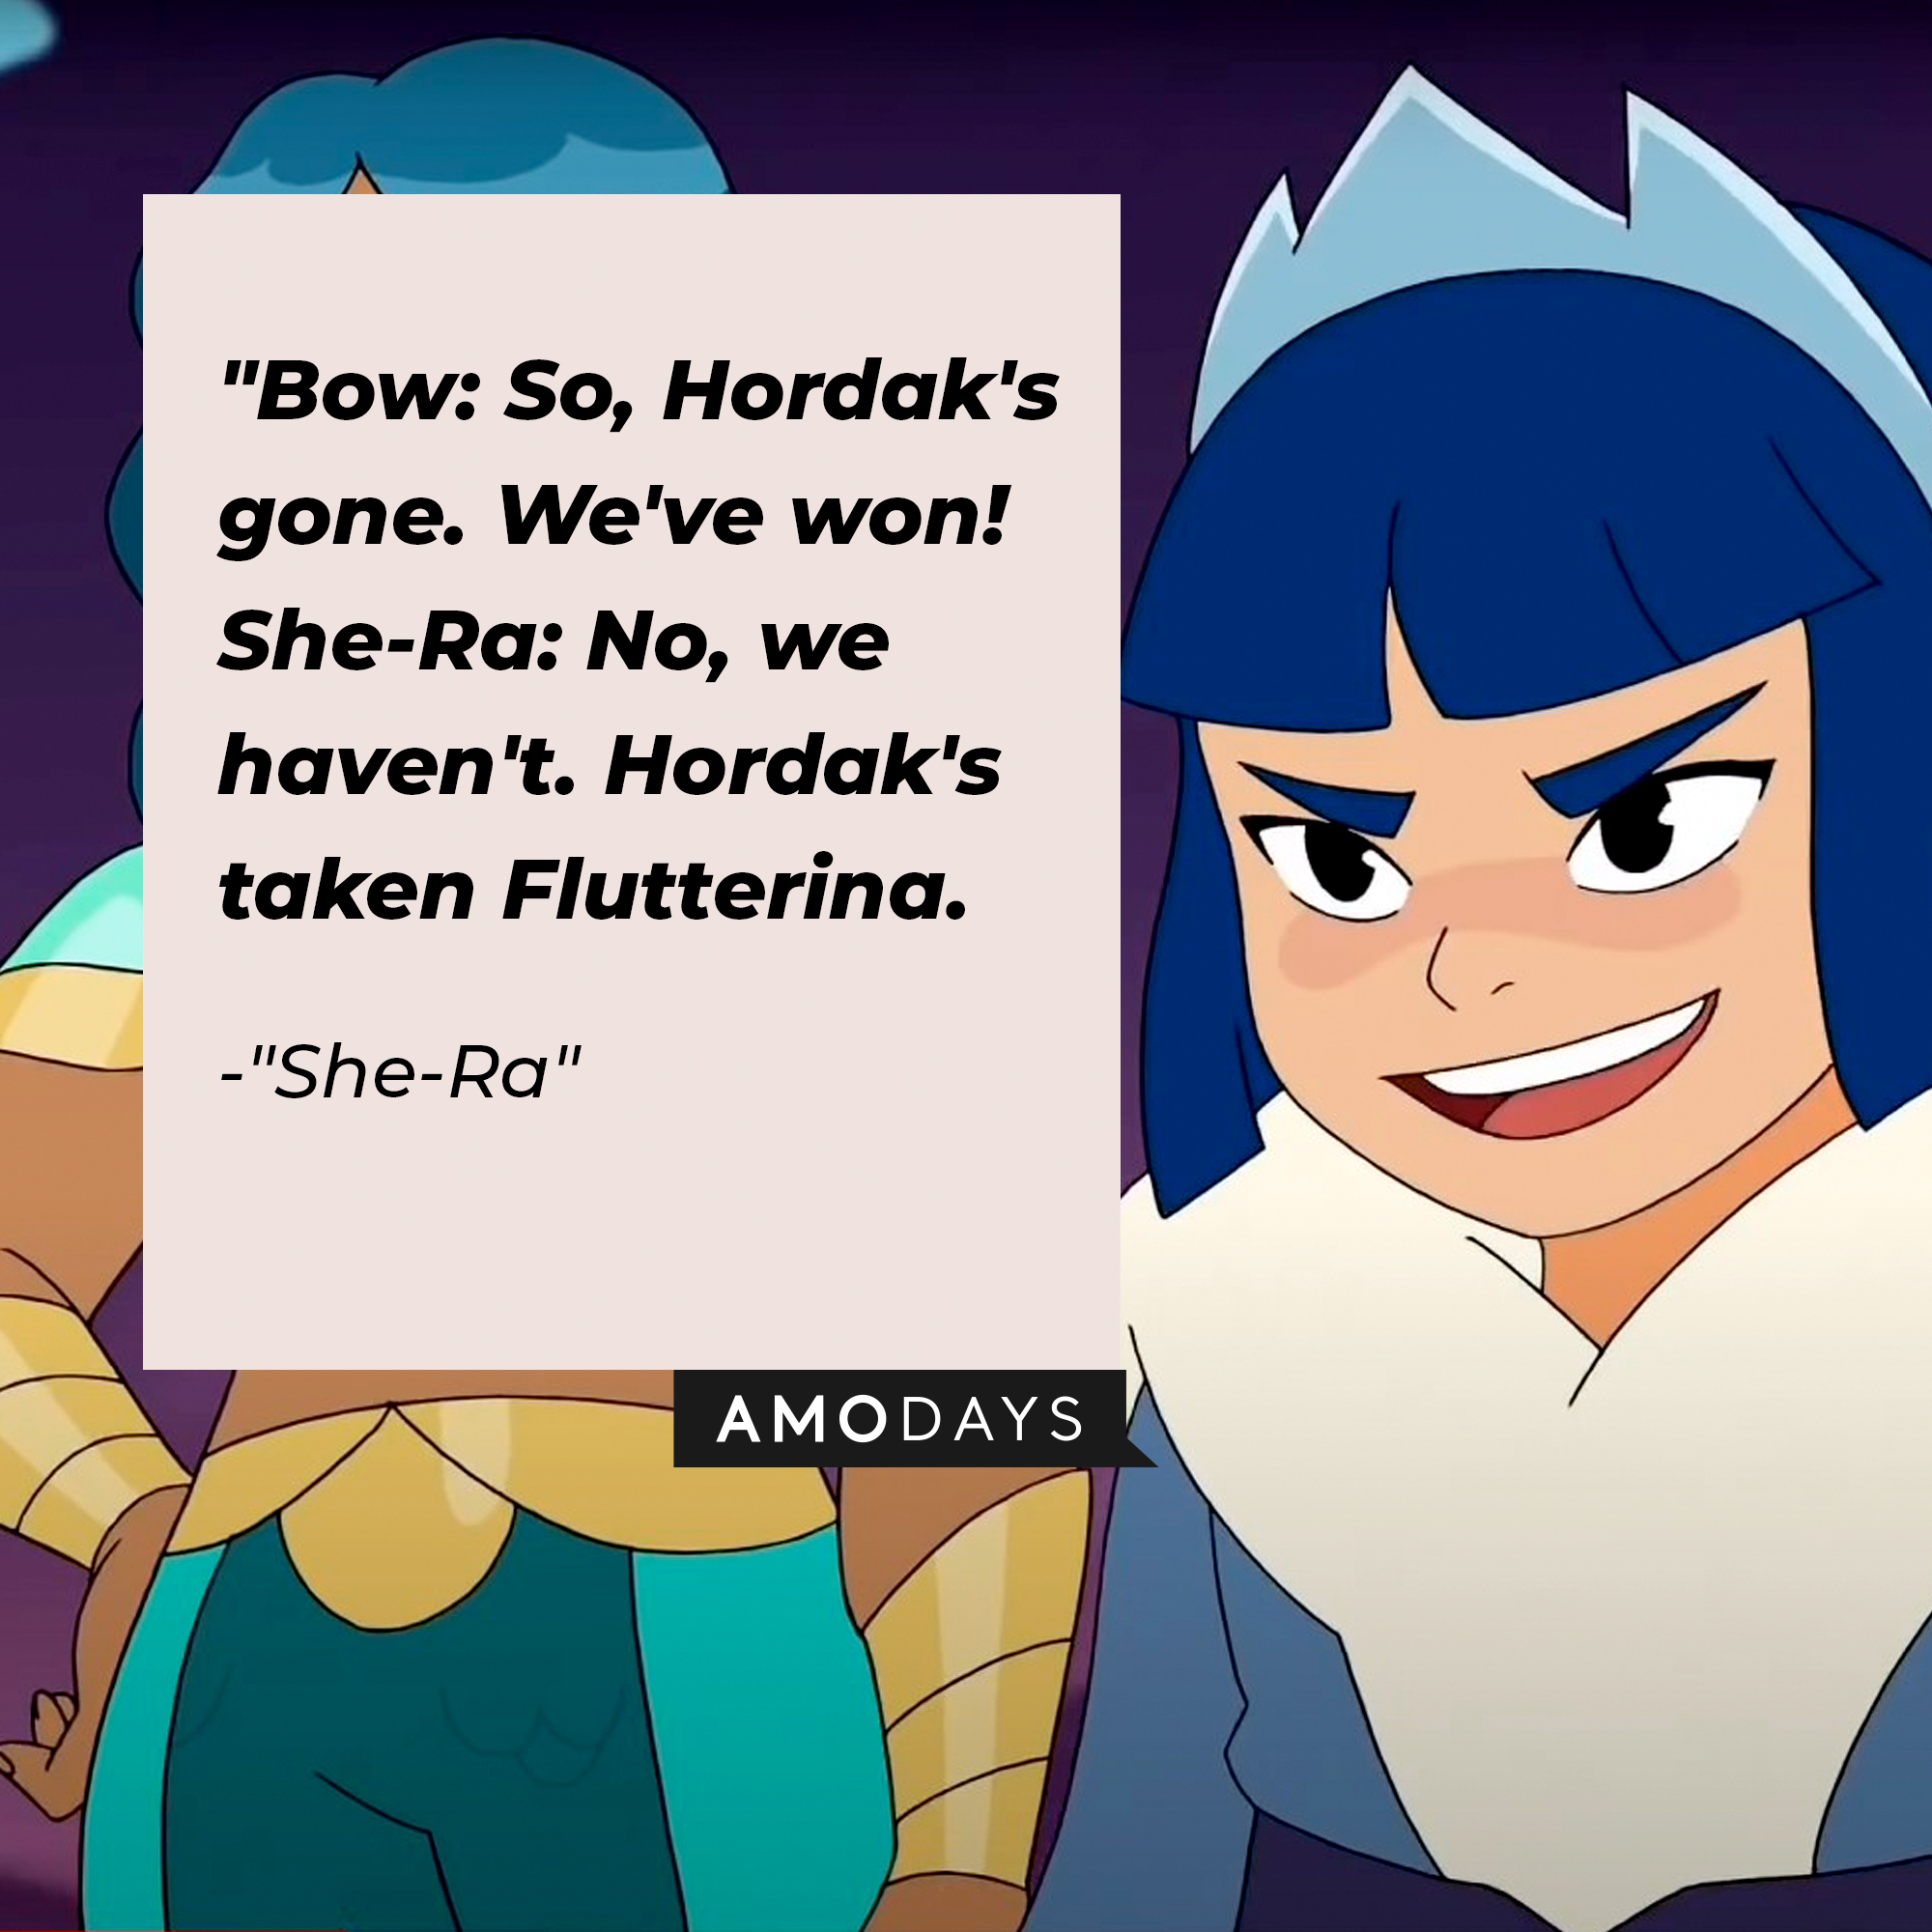 "She-Ra's" quote: "Bow: So, Hordak's gone. We've won! / She-Ra: No, we haven't. Hordak's taken Flutterina." | Source: Facebook.com/DreamWorksSheRa